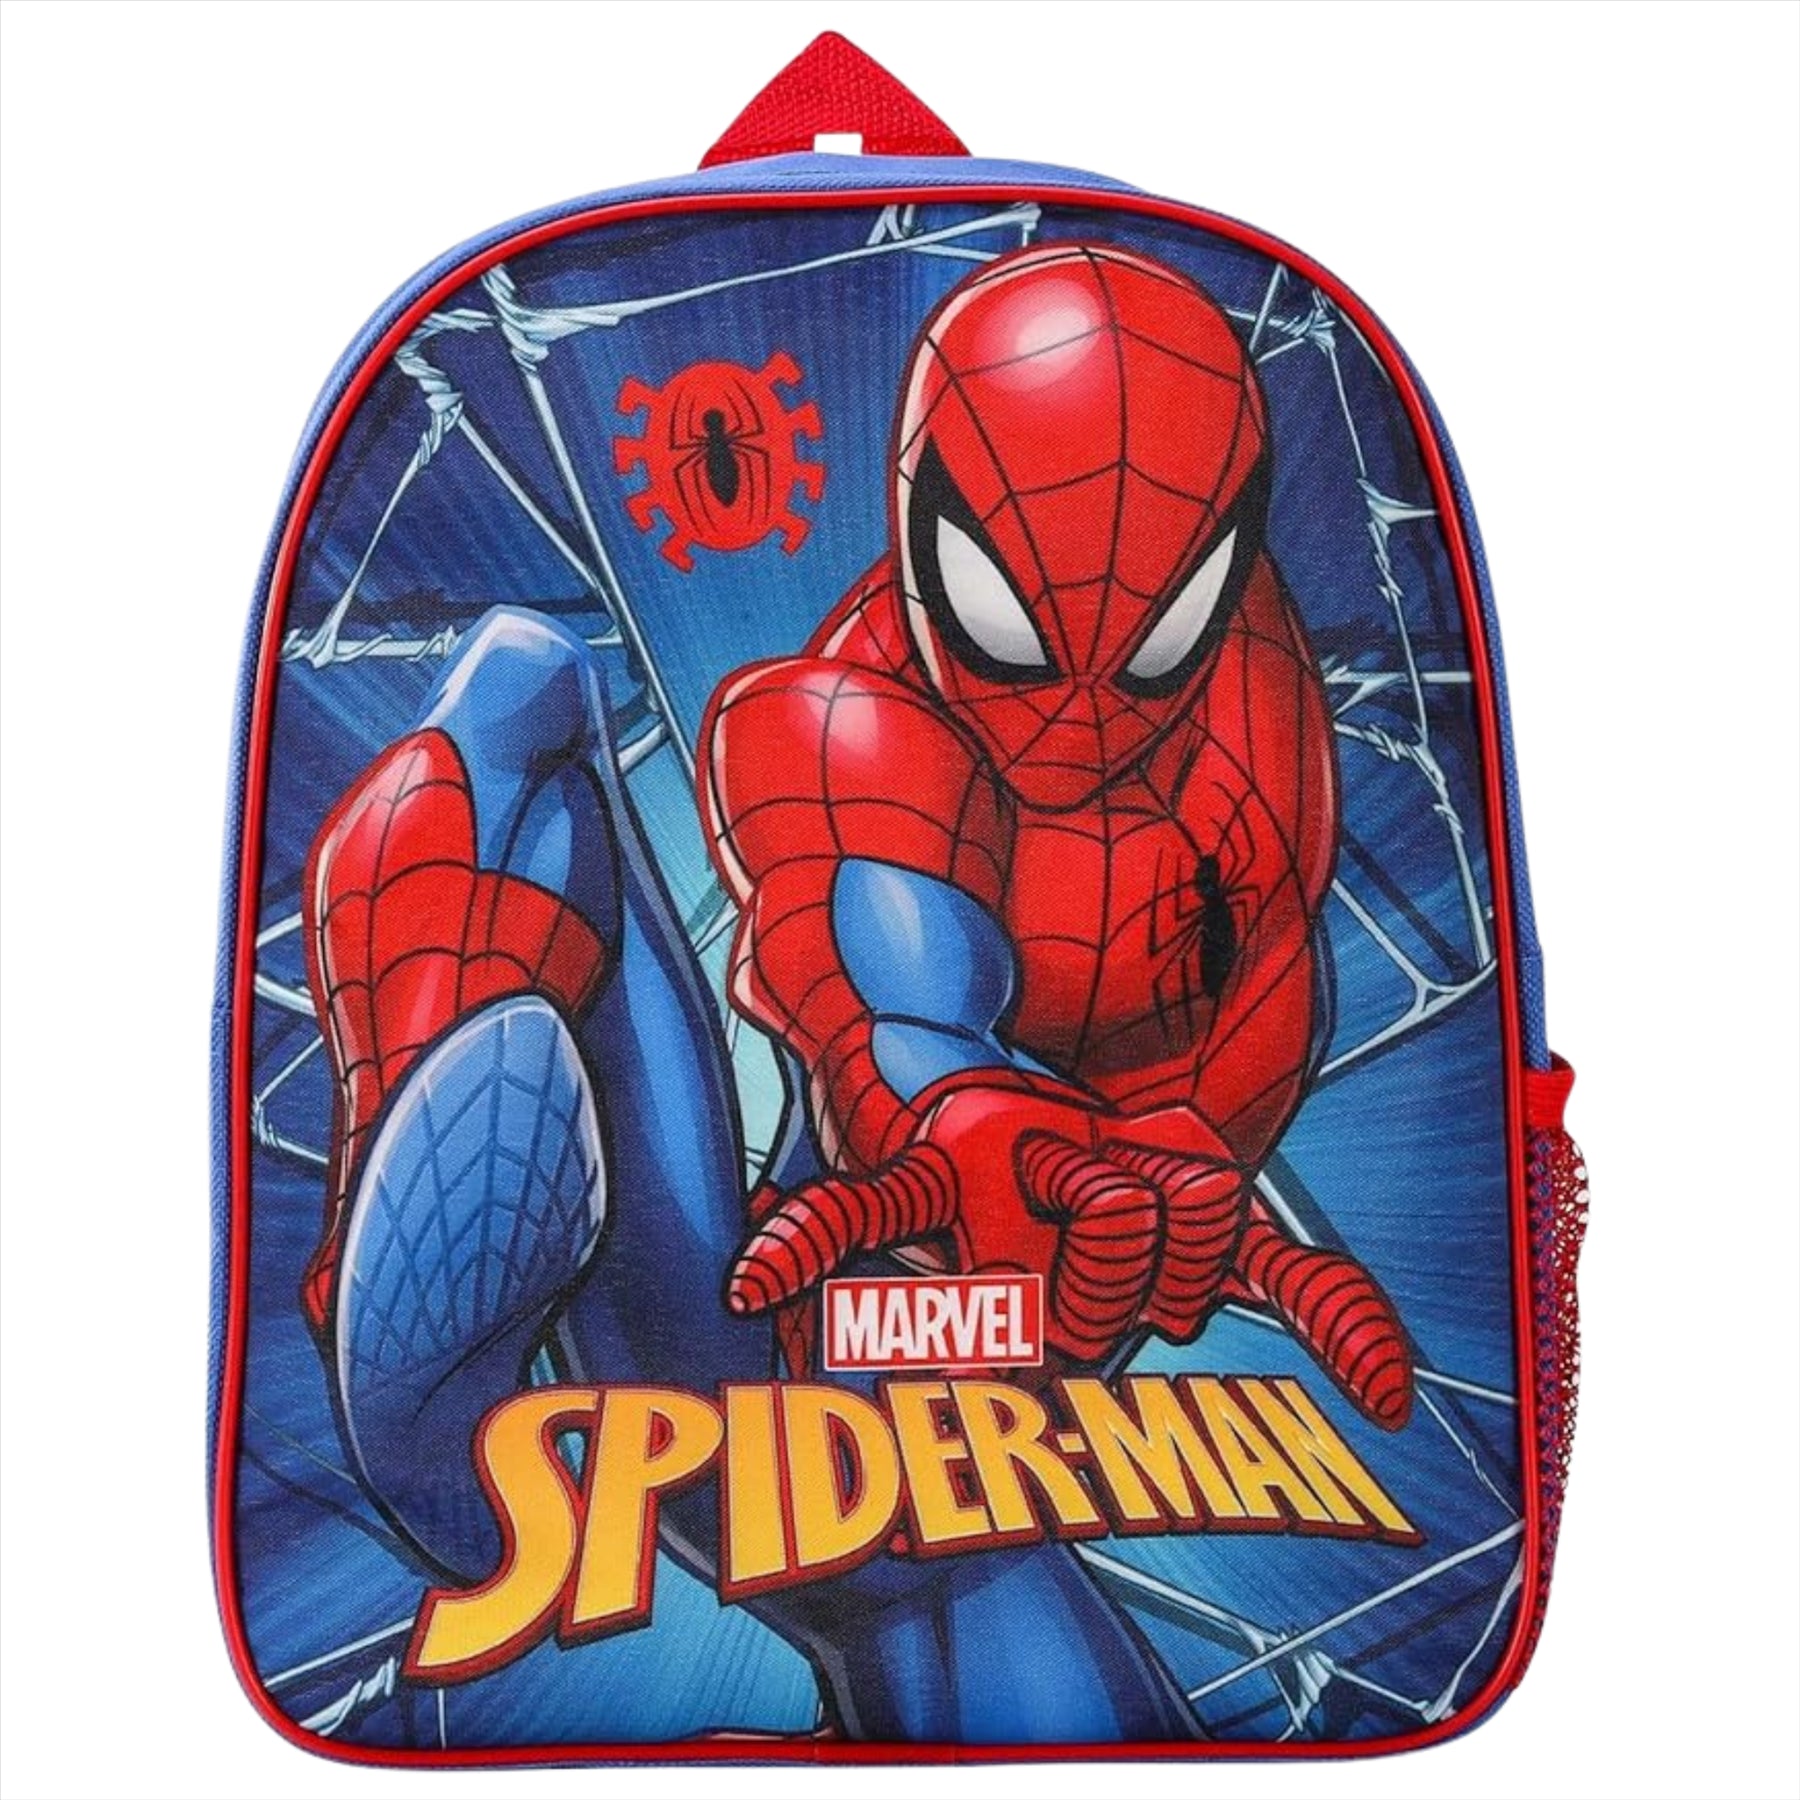 Spiderman Junior Backpack - Kids Character School Bag with Mesh Side Pocket